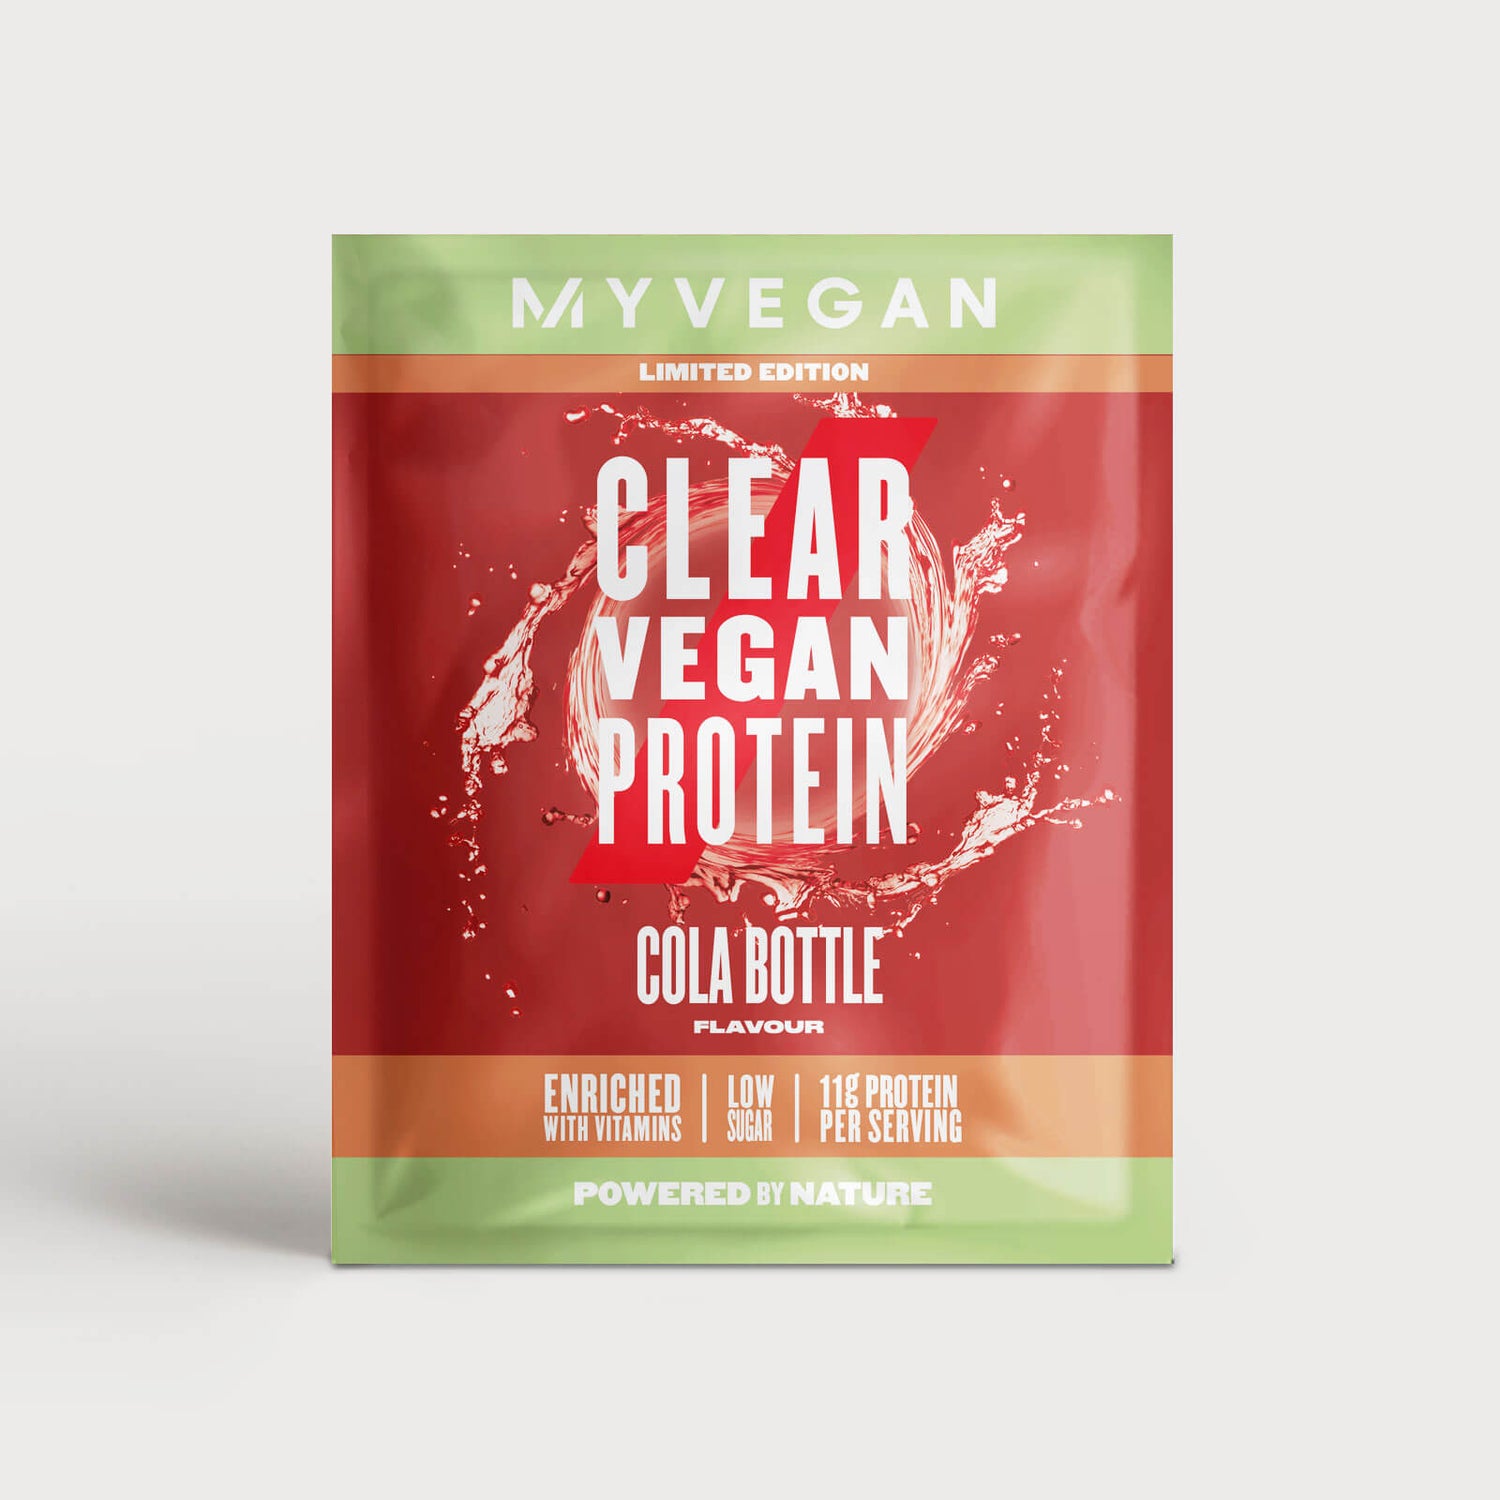 Clear Vegan Protein - Cola Bottle (Sample)